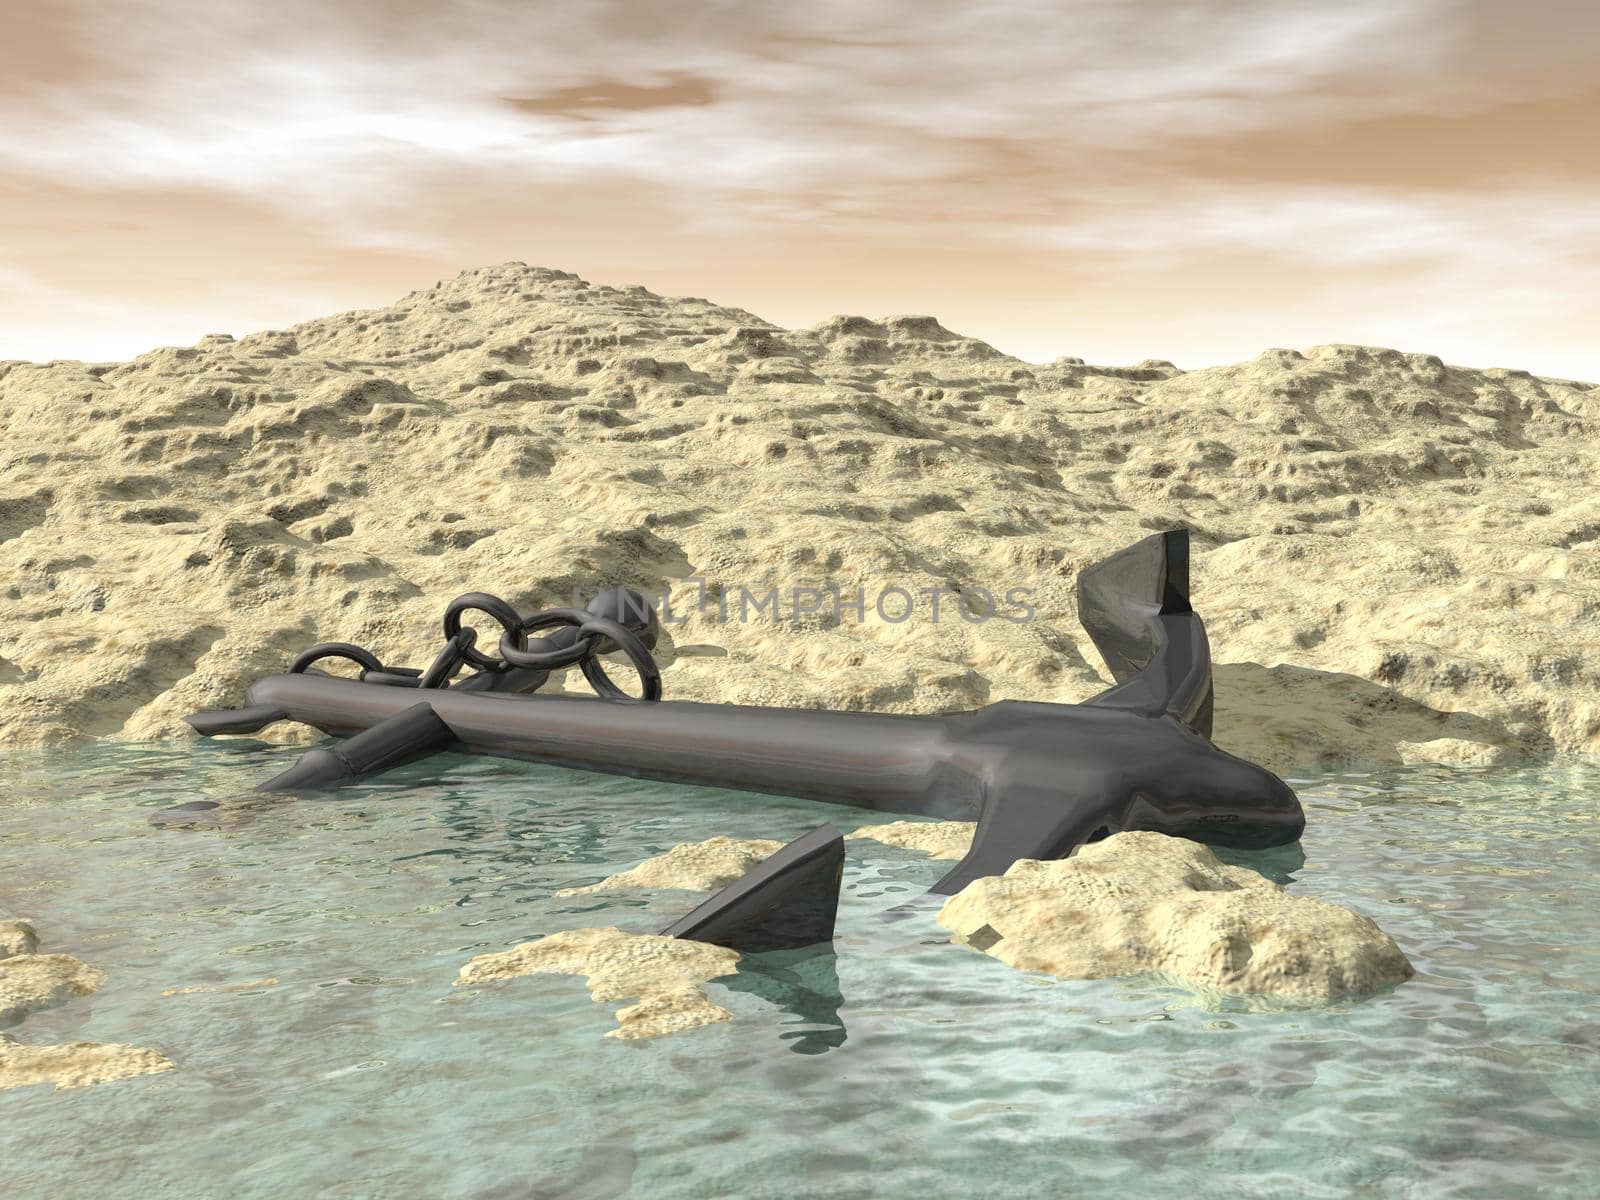 Lost anchor - 3D render by Elenaphotos21